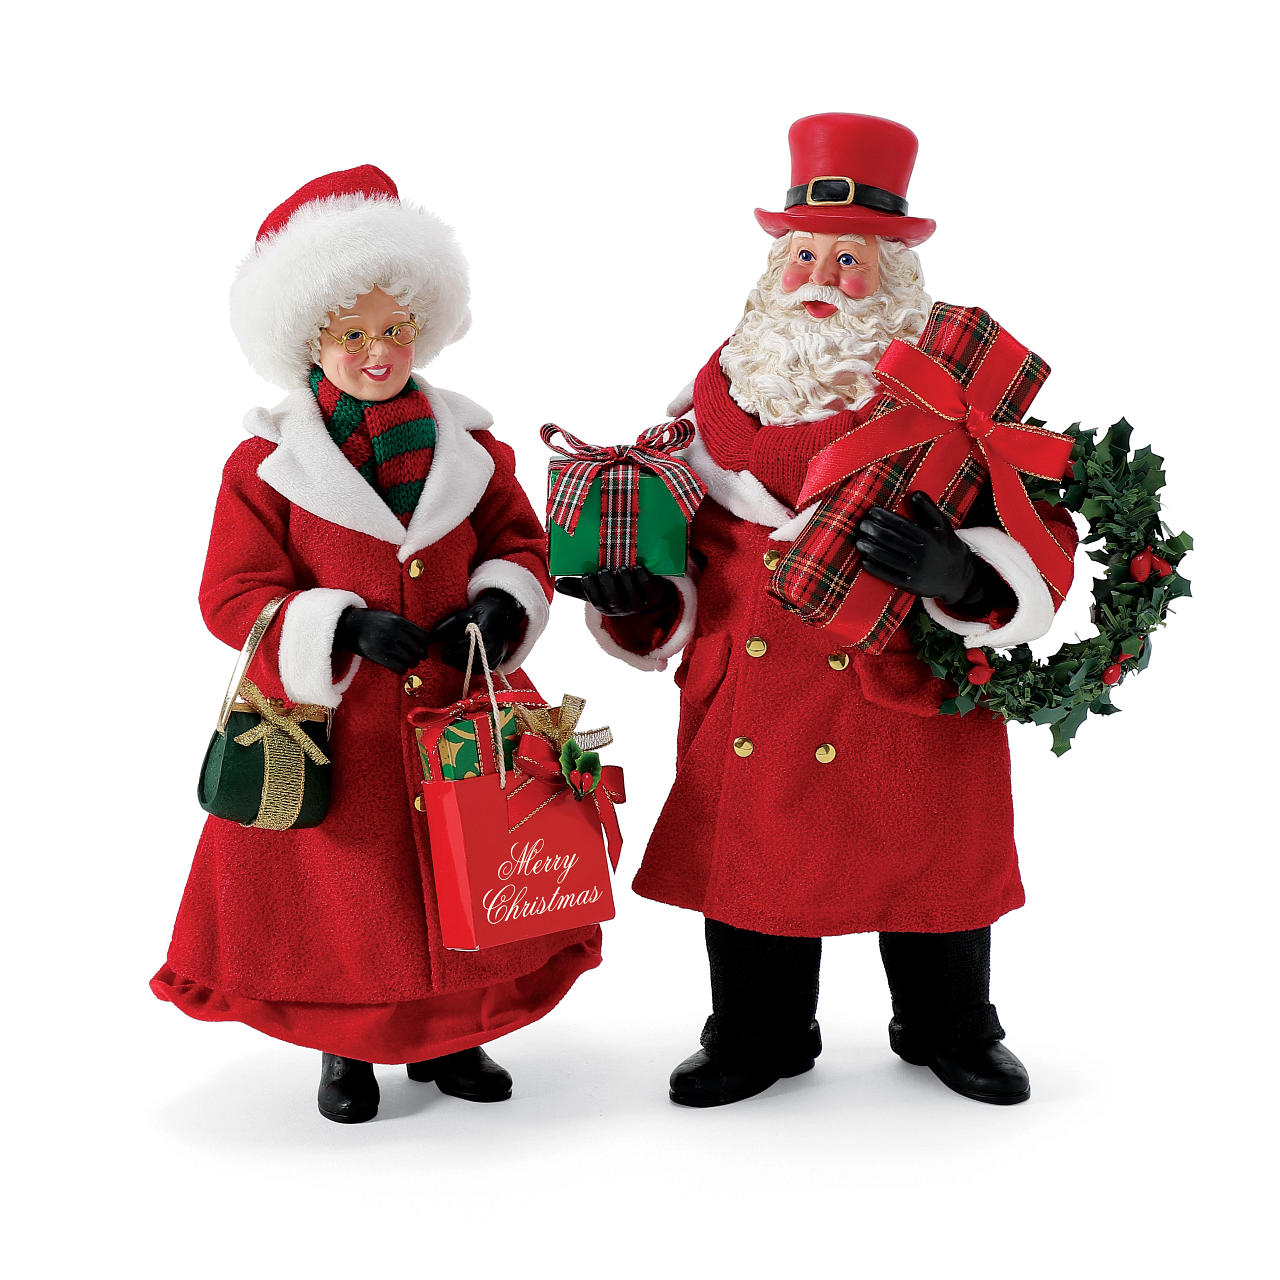 Possible Dreams Santa Claus Reindeer Ride Fabric Clothtique Holiday Xmas Dept 56